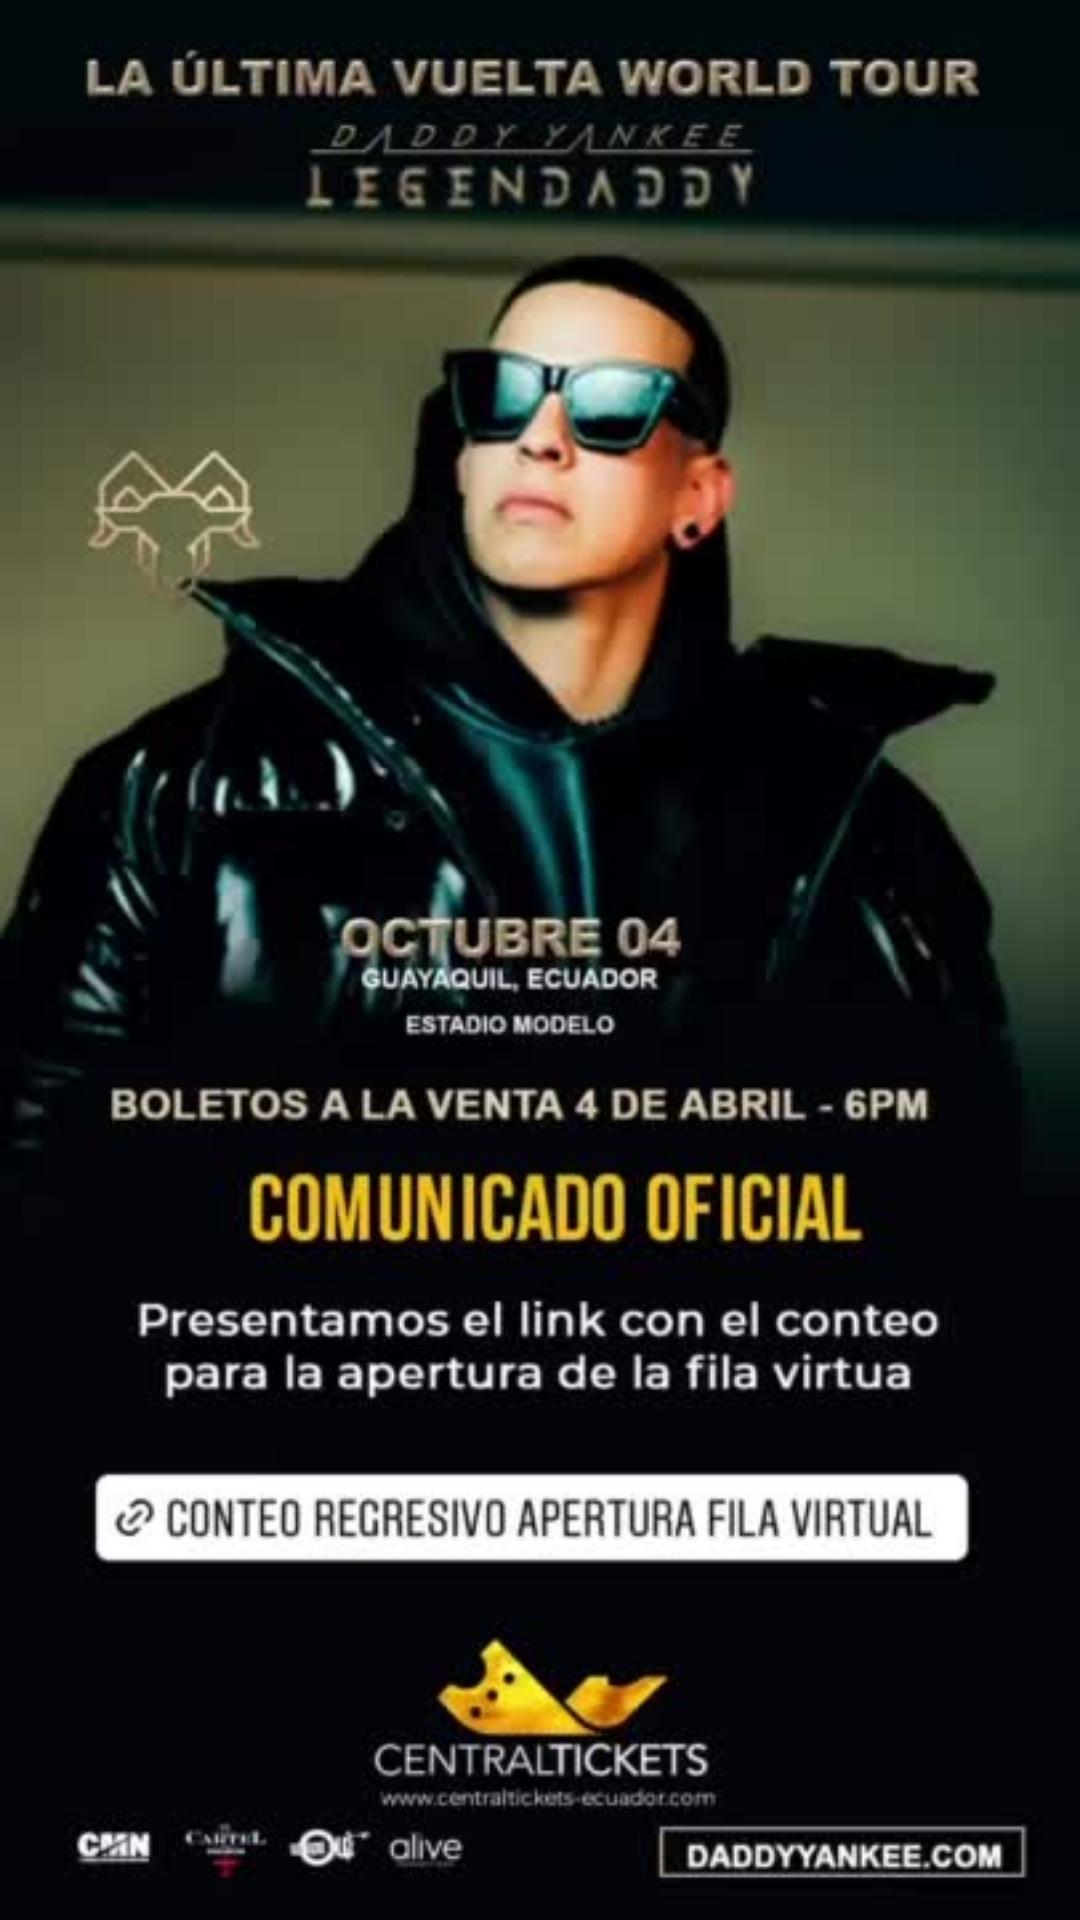 Daddy Yankee Fila Virtual Central Tickets (2)